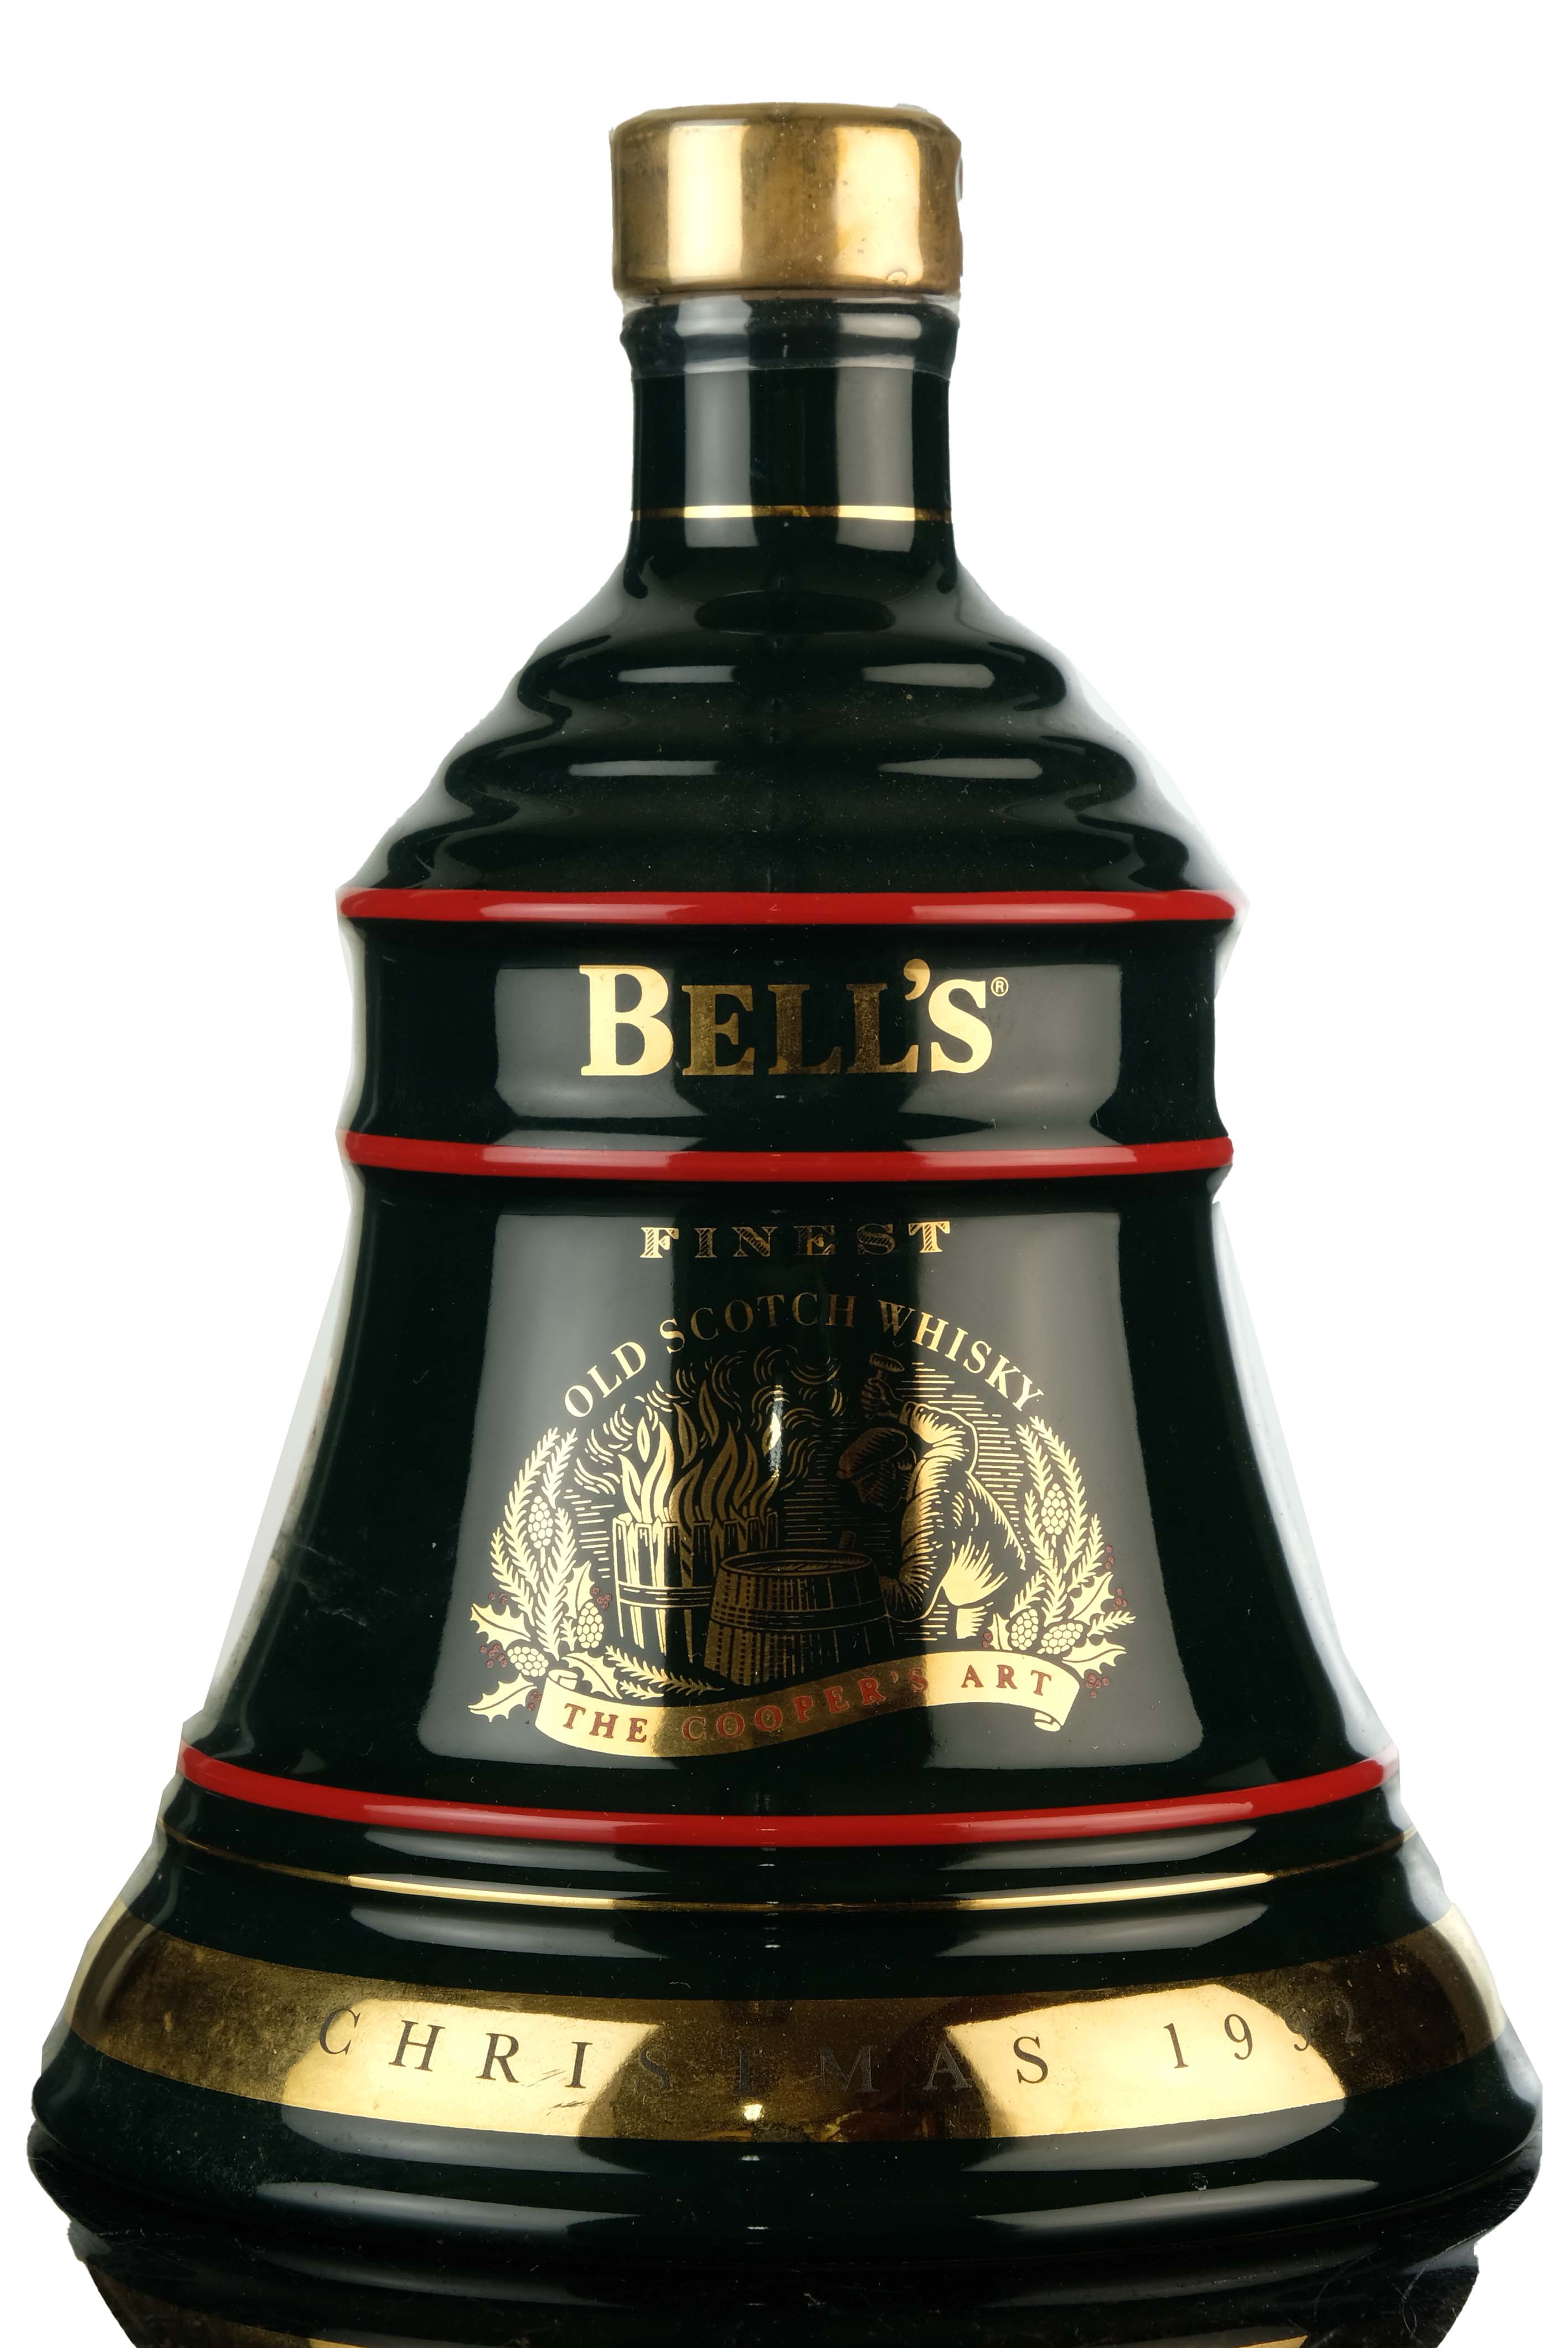 Bells Christmas 1992